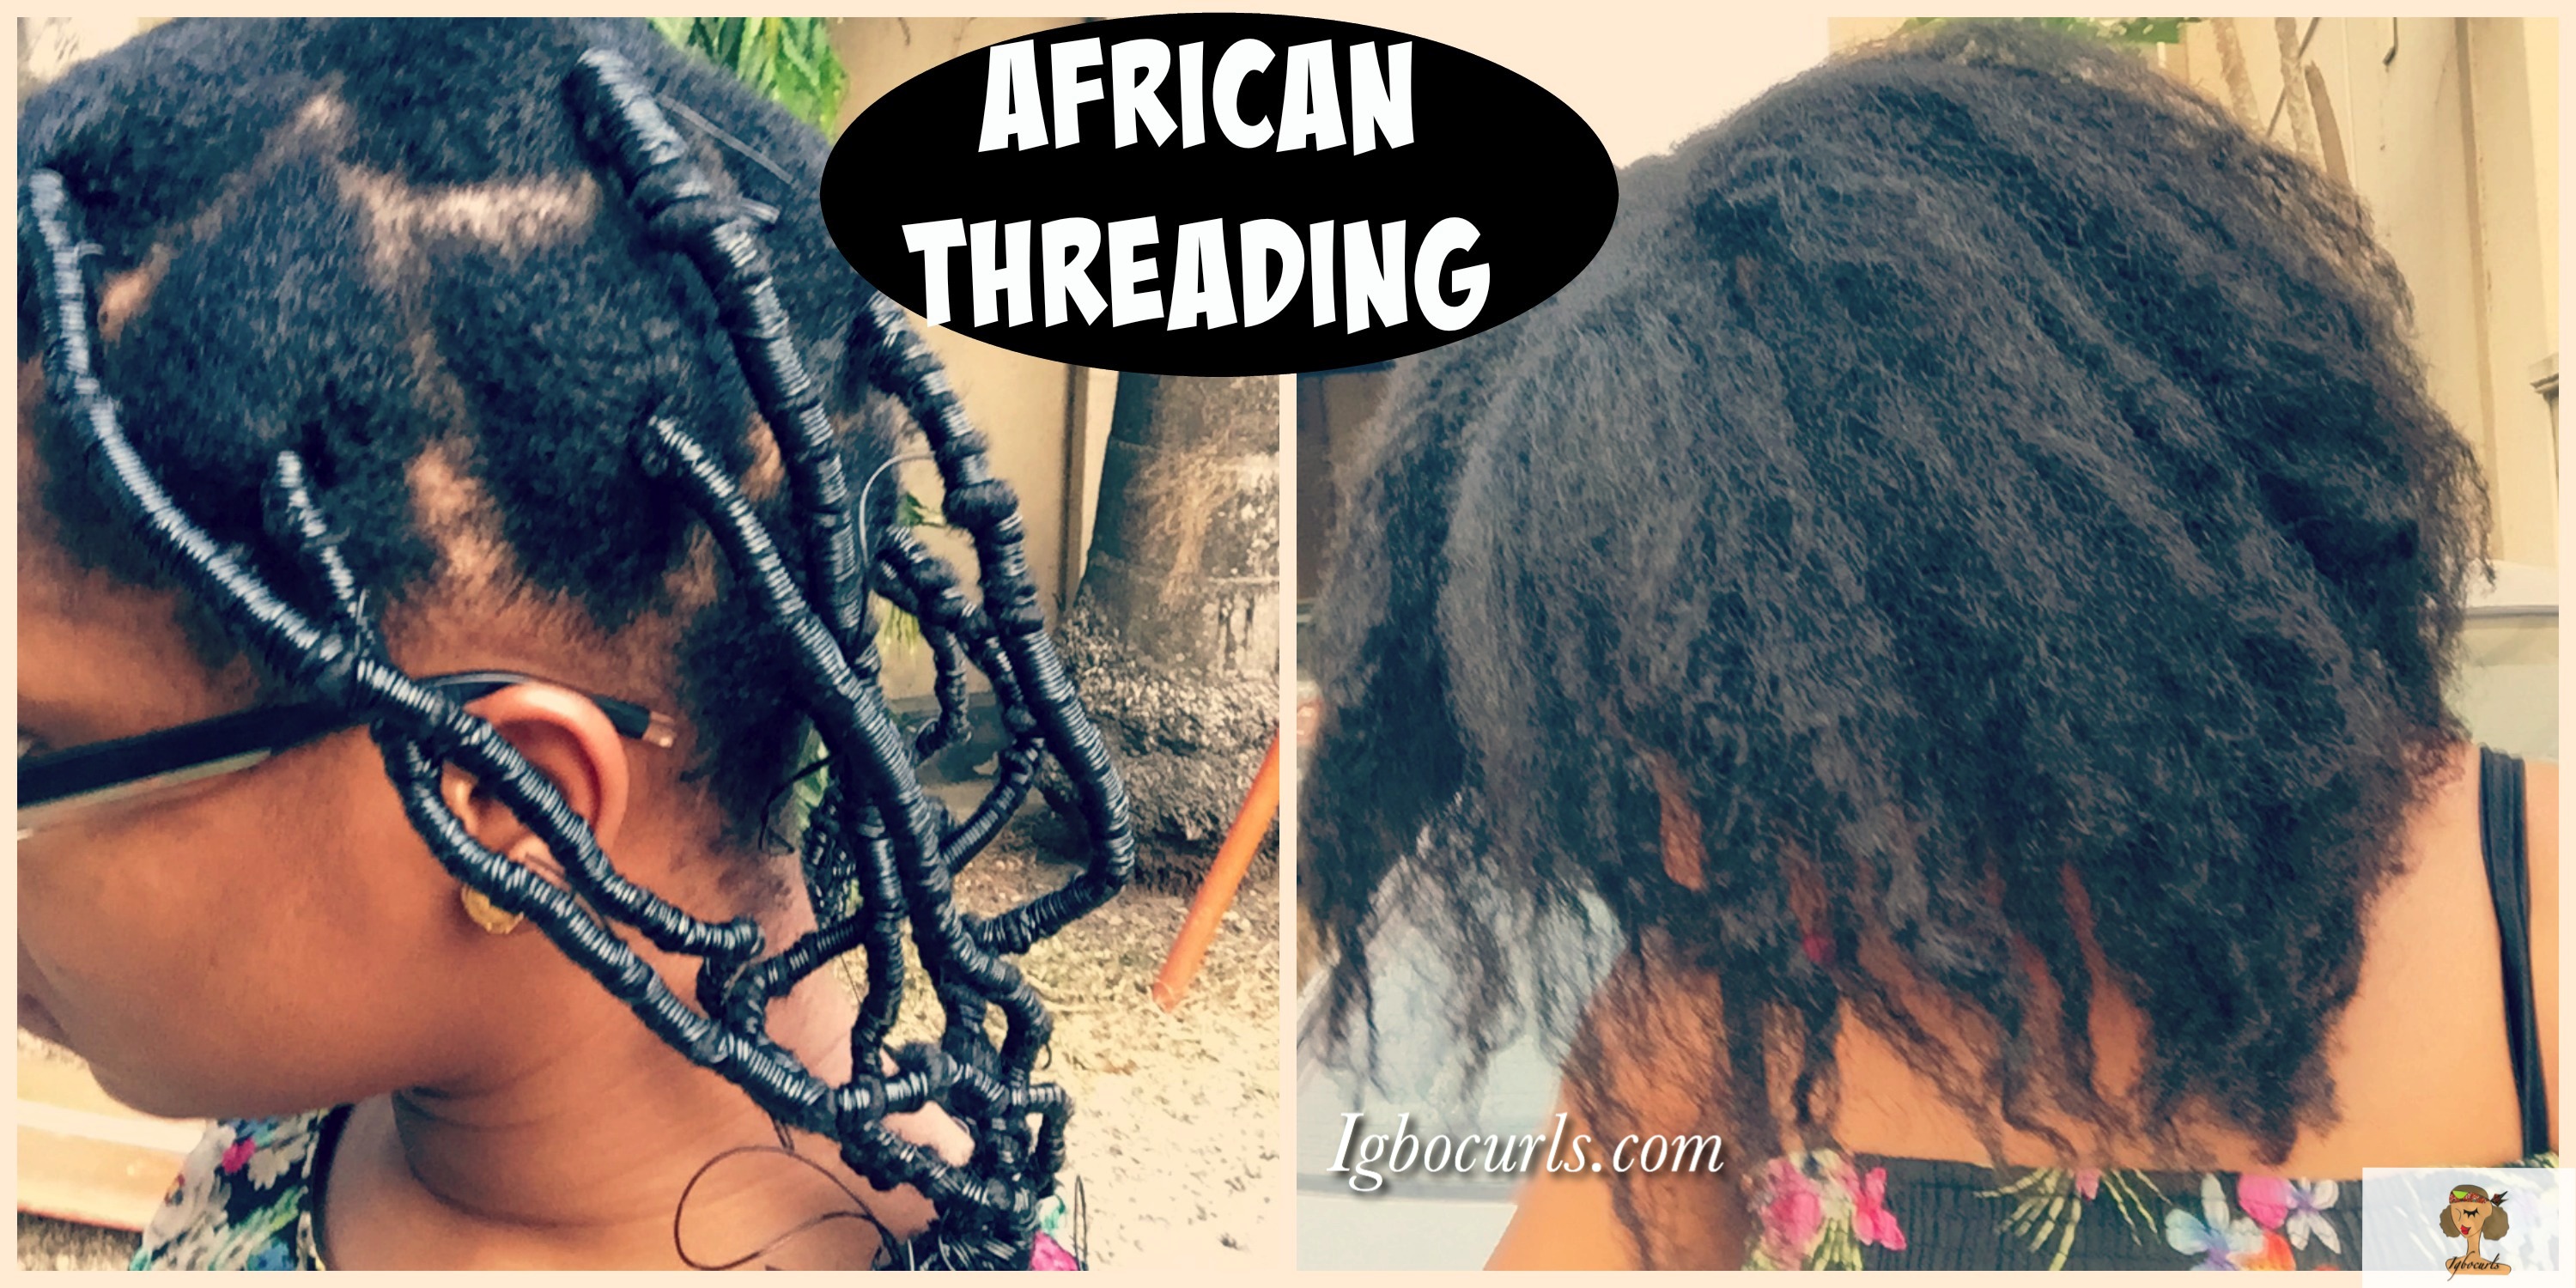 AFRICAN THREADING - Igbocurls